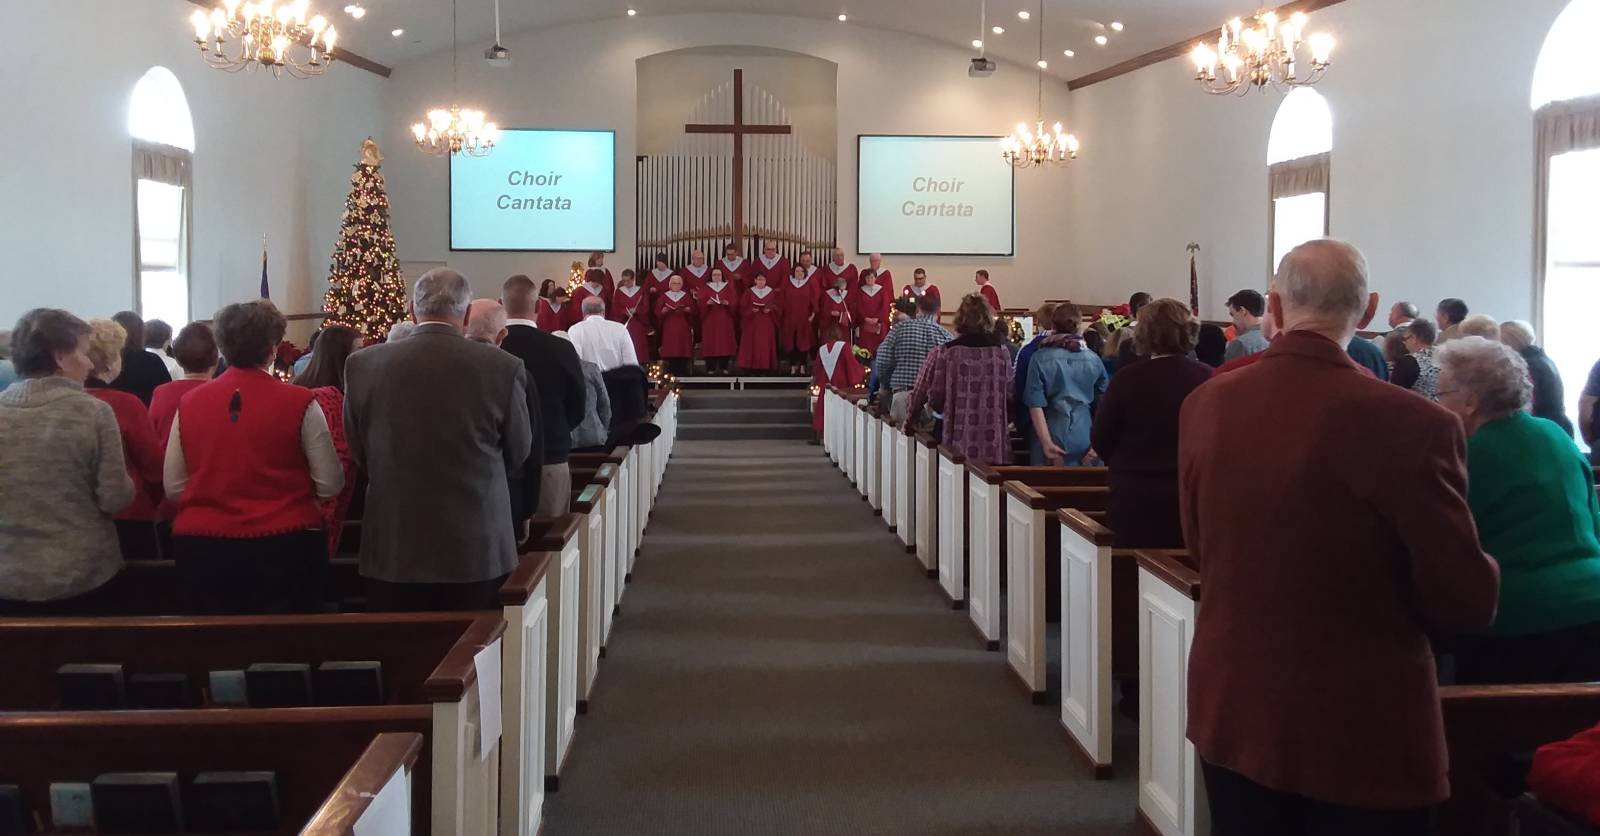 The choir performs a Christmas cantata at the Paoli United Methodist Church.